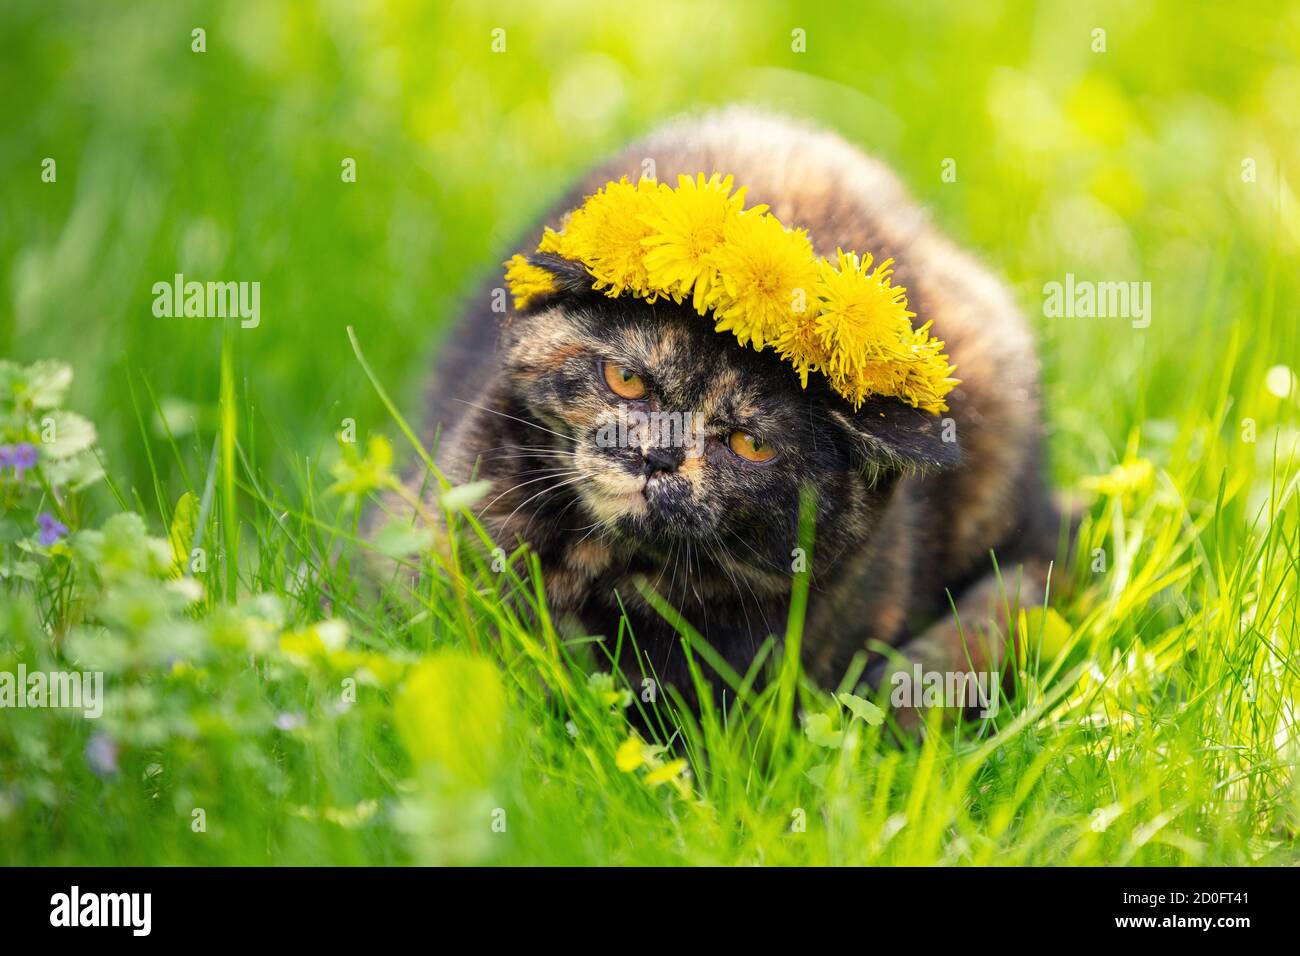 Funny little tortoiseshell kitten in a wreath of dandelion flowers lies on the grass Stock Photo